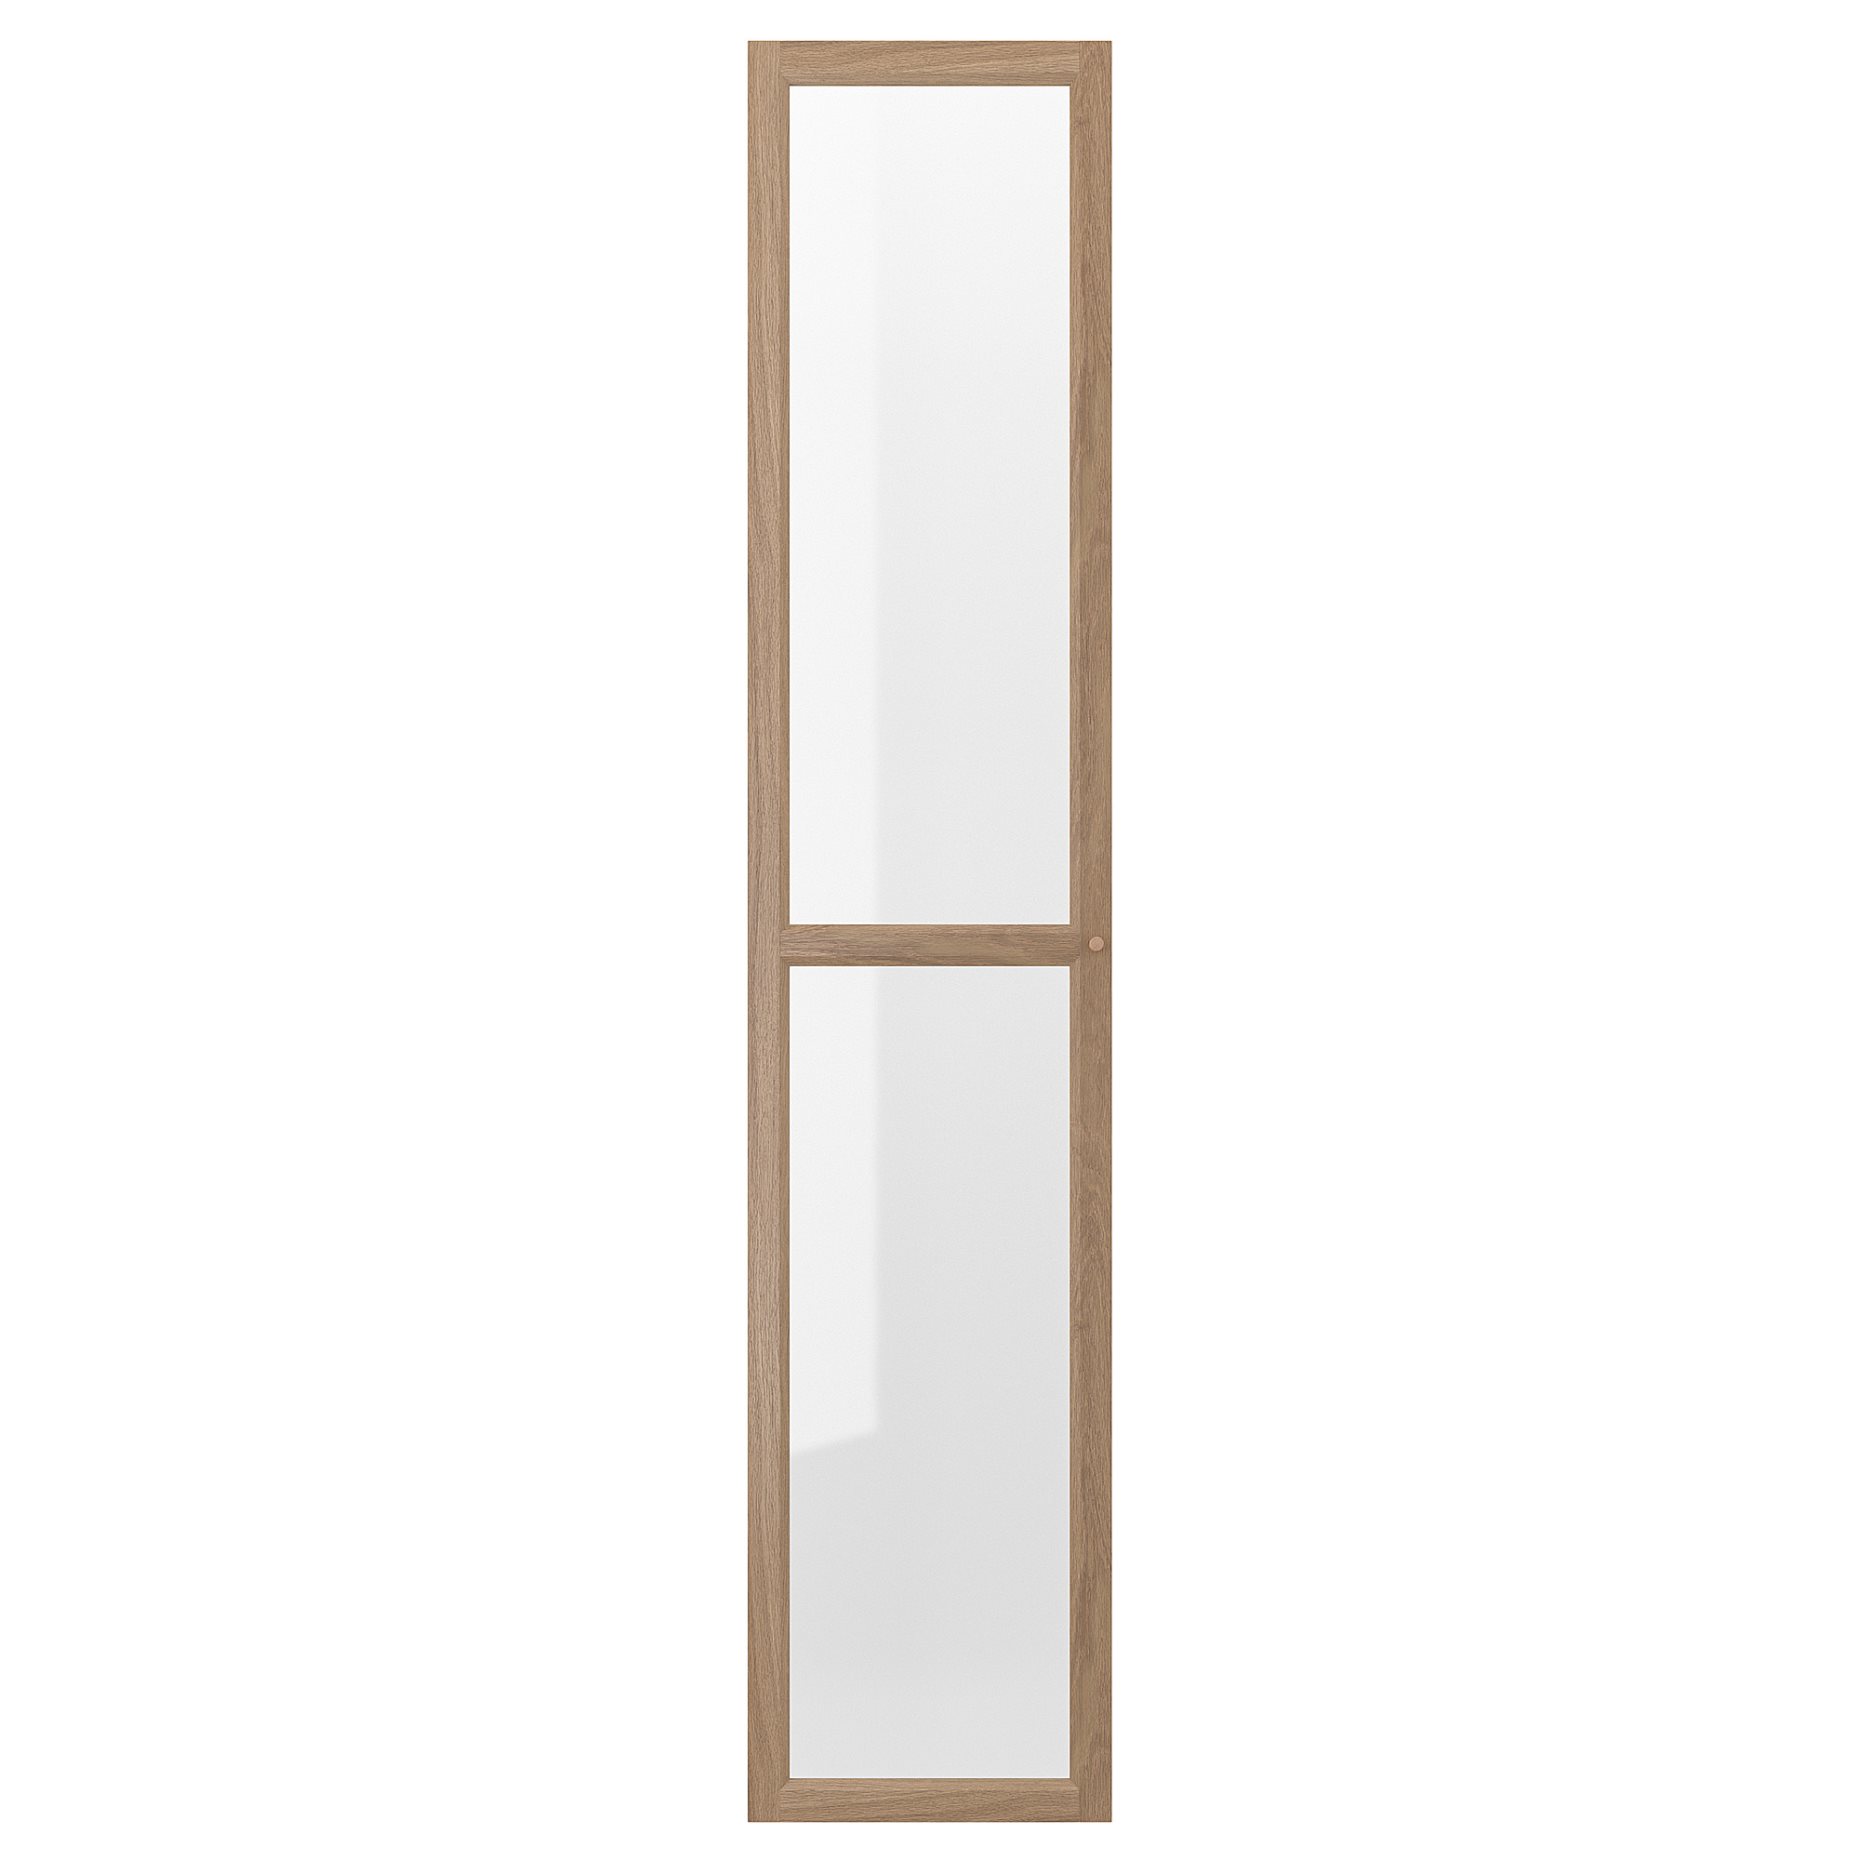 OXBERG, γυάλινη πόρτα, 40x192 cm, 404.774.15